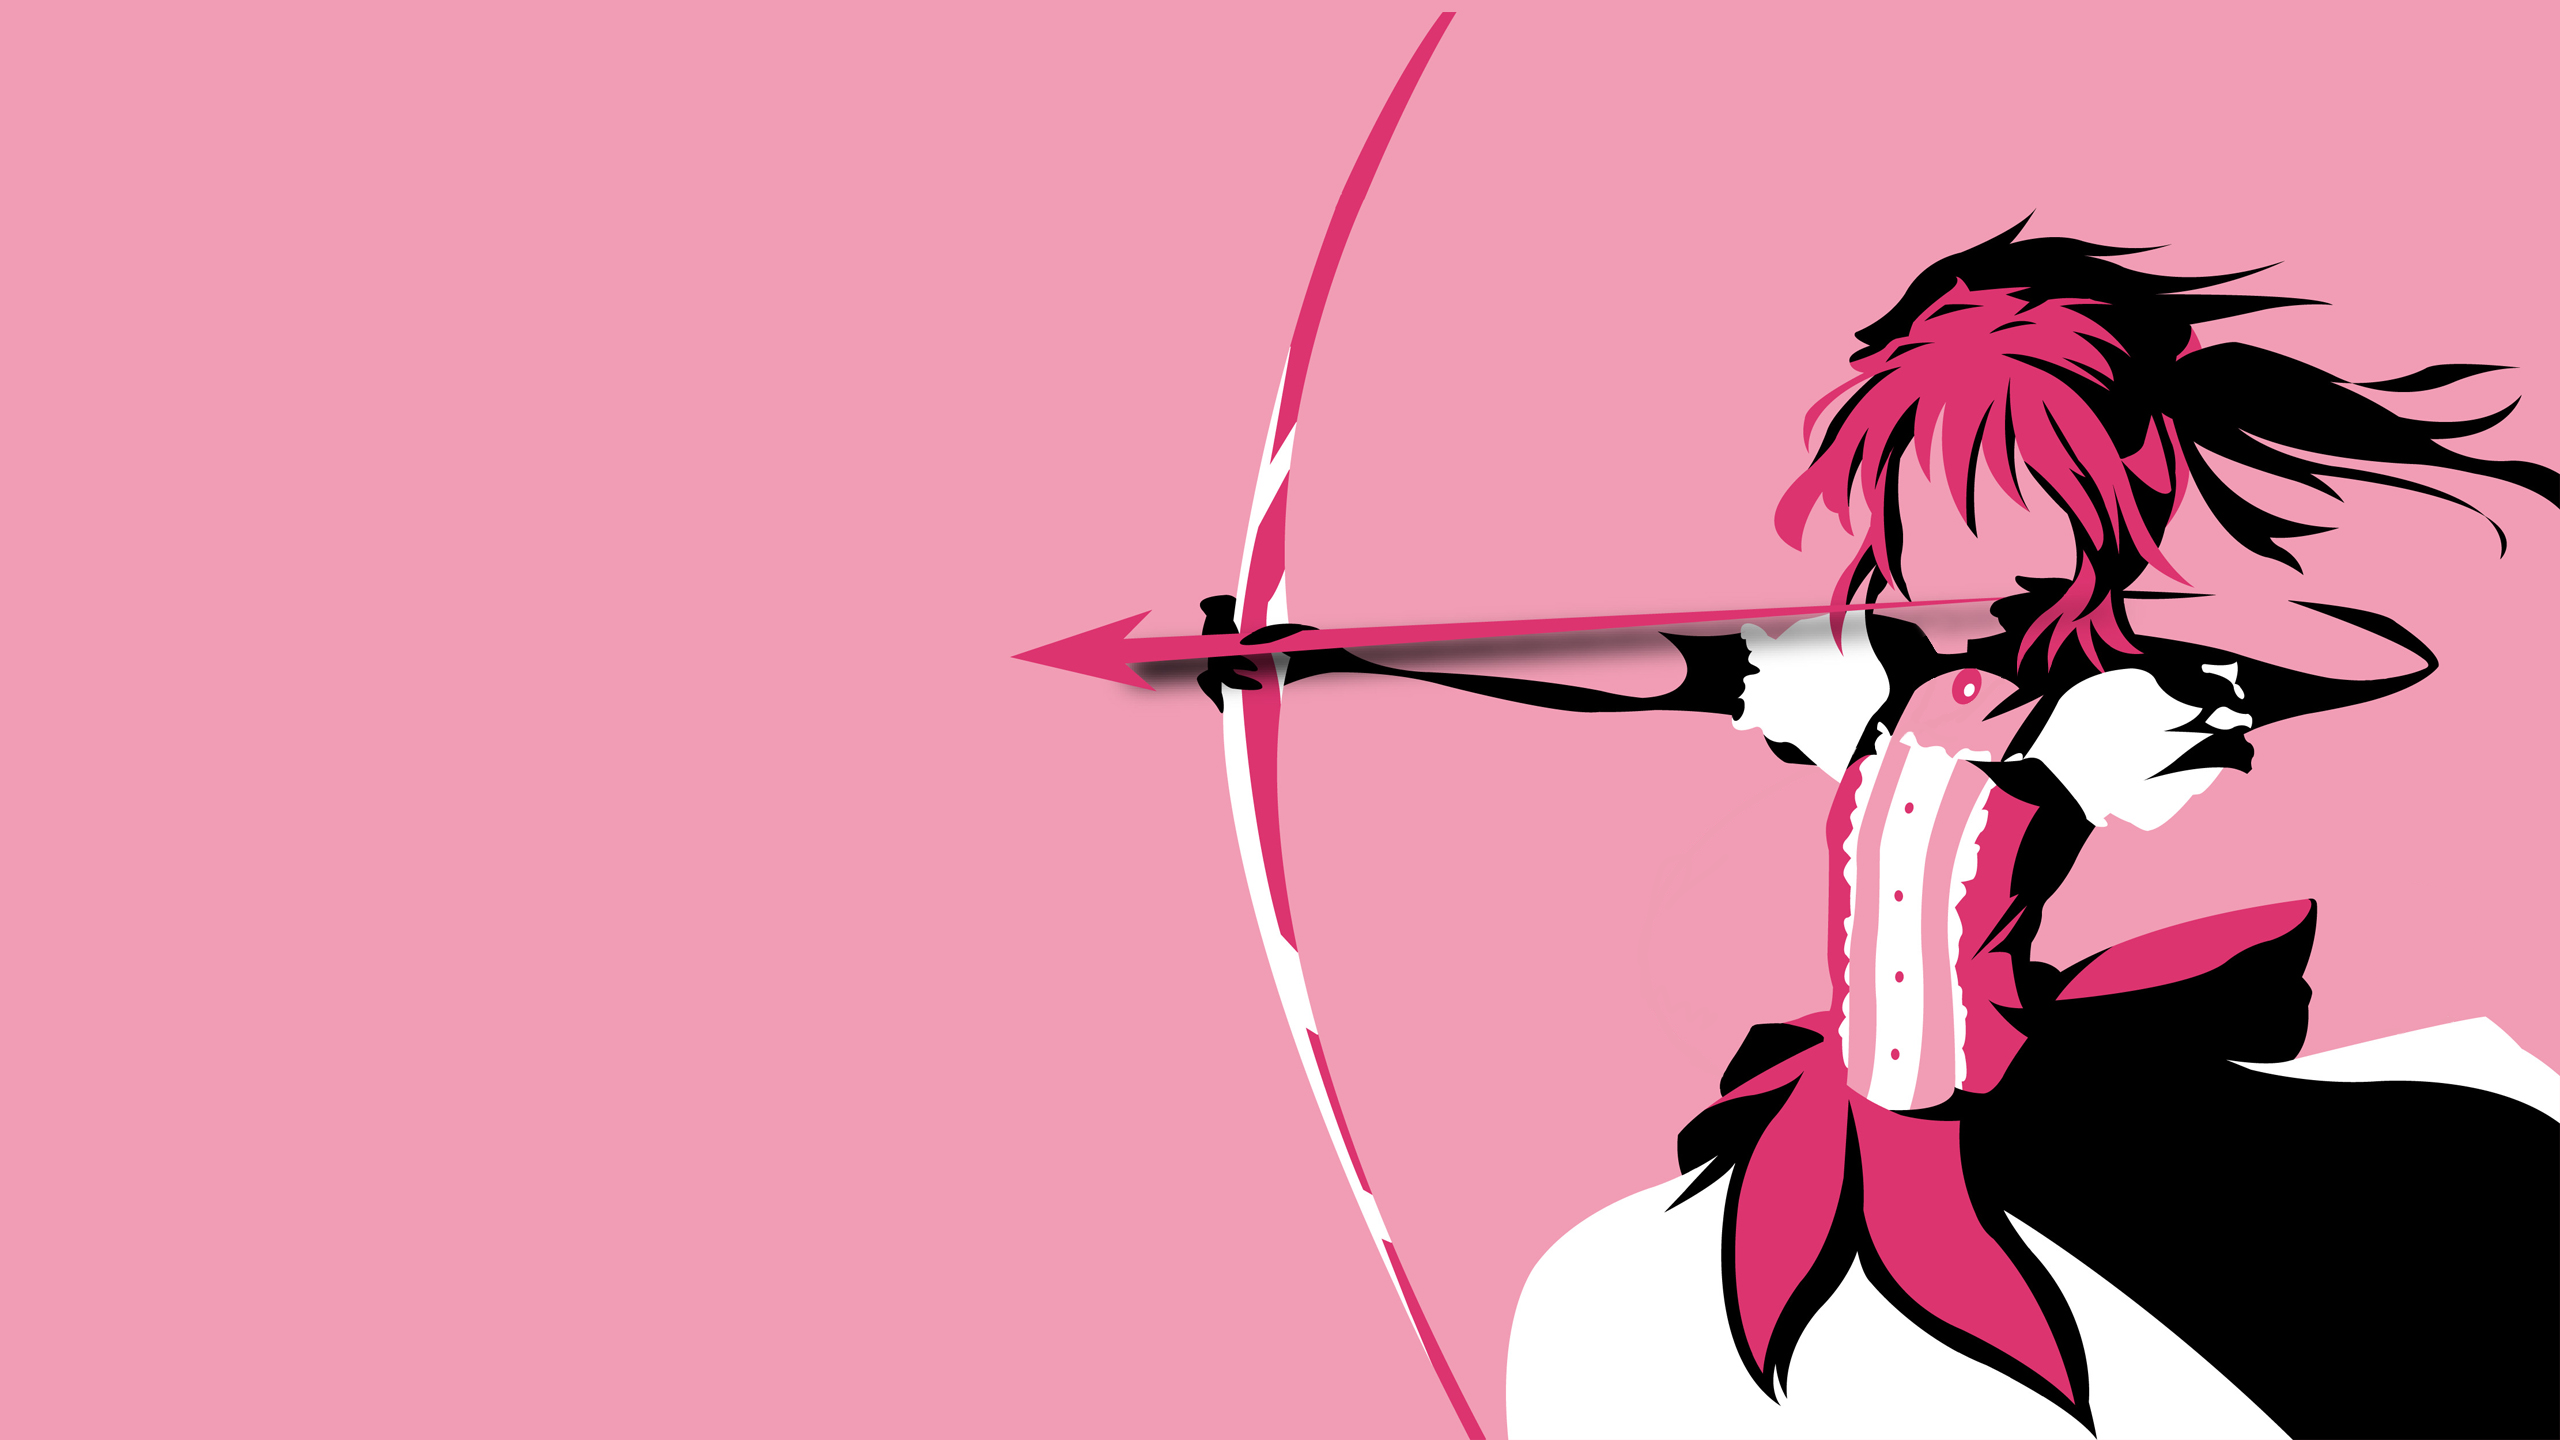 Anime 2560x1440 anime anime girls Mahou Shoujo Madoka Magica pink background simple background bow and arrow aiming girls with guns